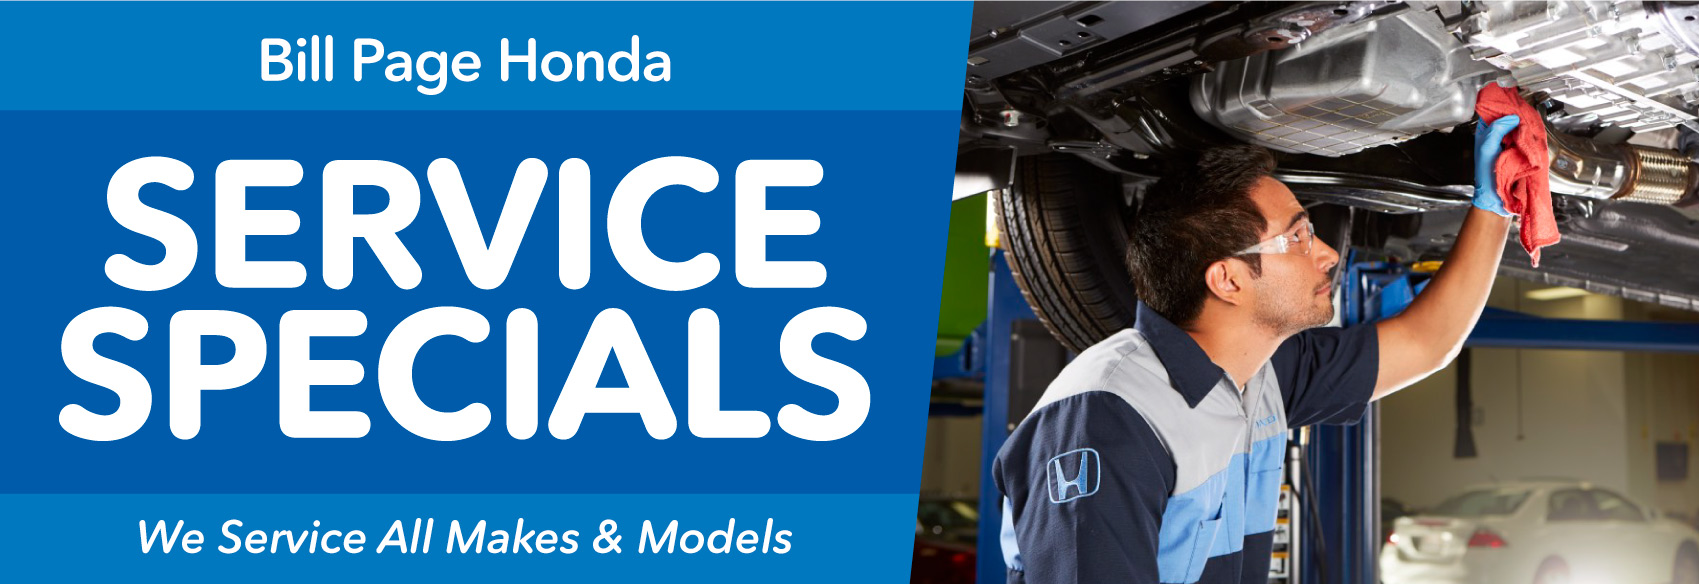 Bill Page Honda Service Specials